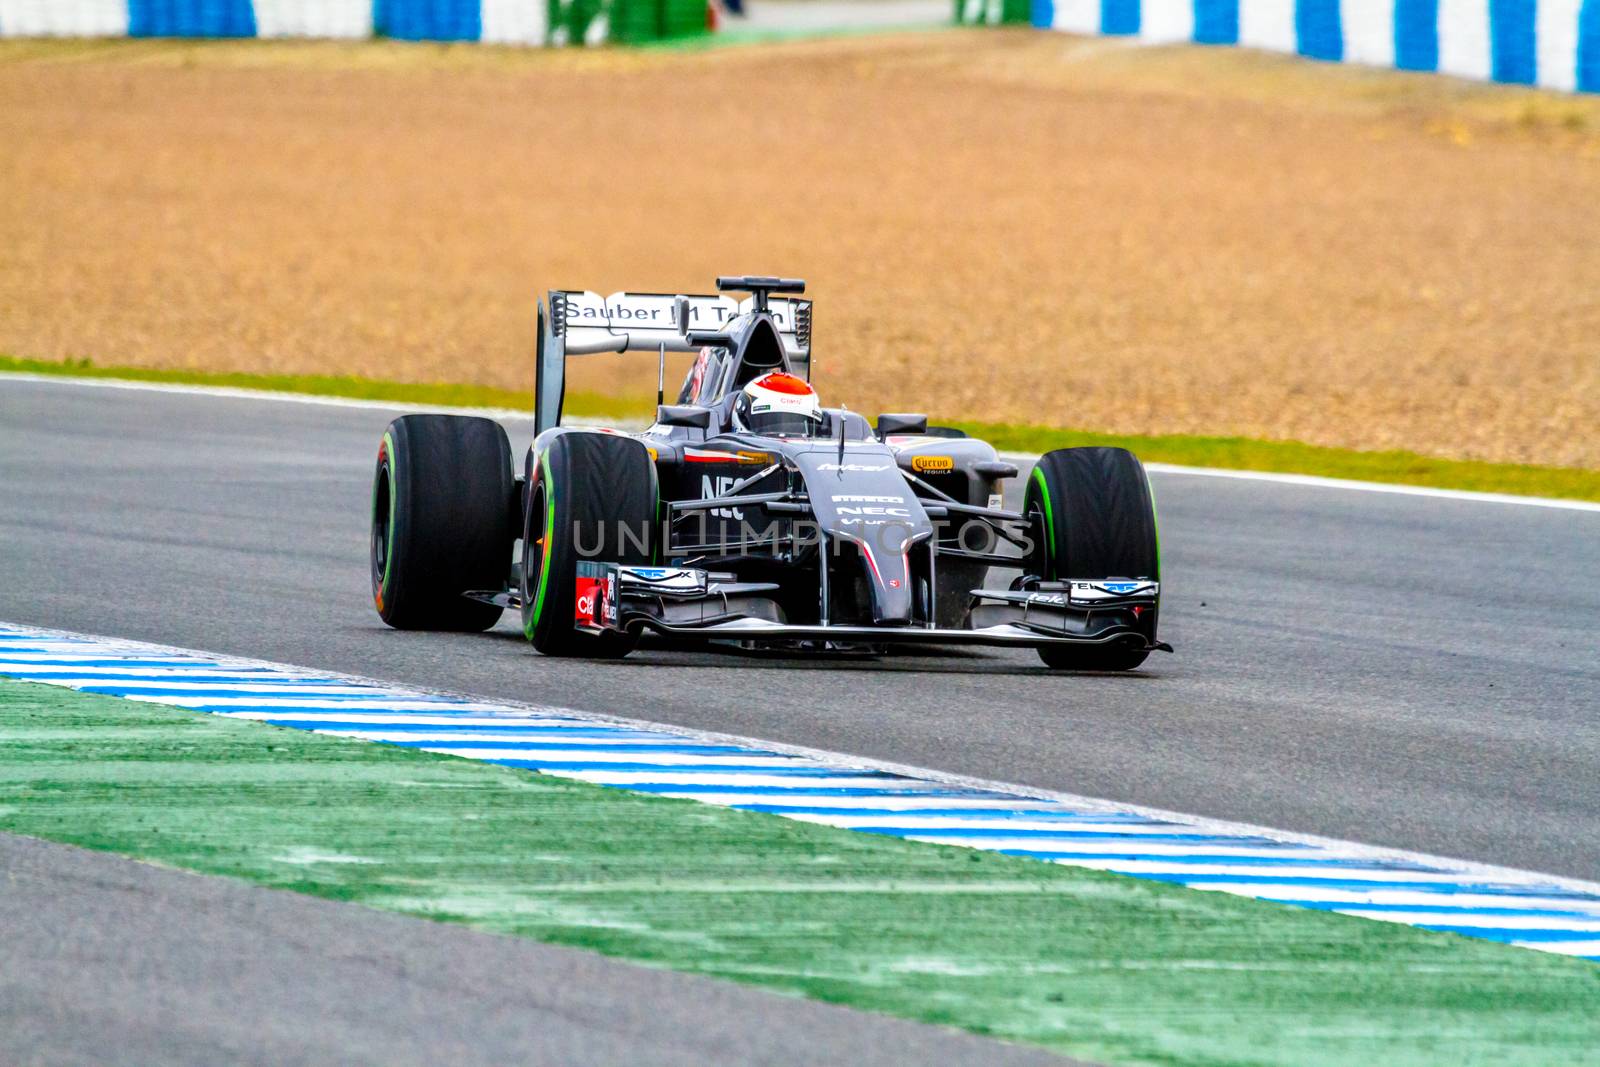 JEREZ DE LA FRONTERA, SPAIN - JAN 31: Adrian Sutil of Sauber F1 races on training session on January 31 , 2014, in Jerez de la Frontera , Spain